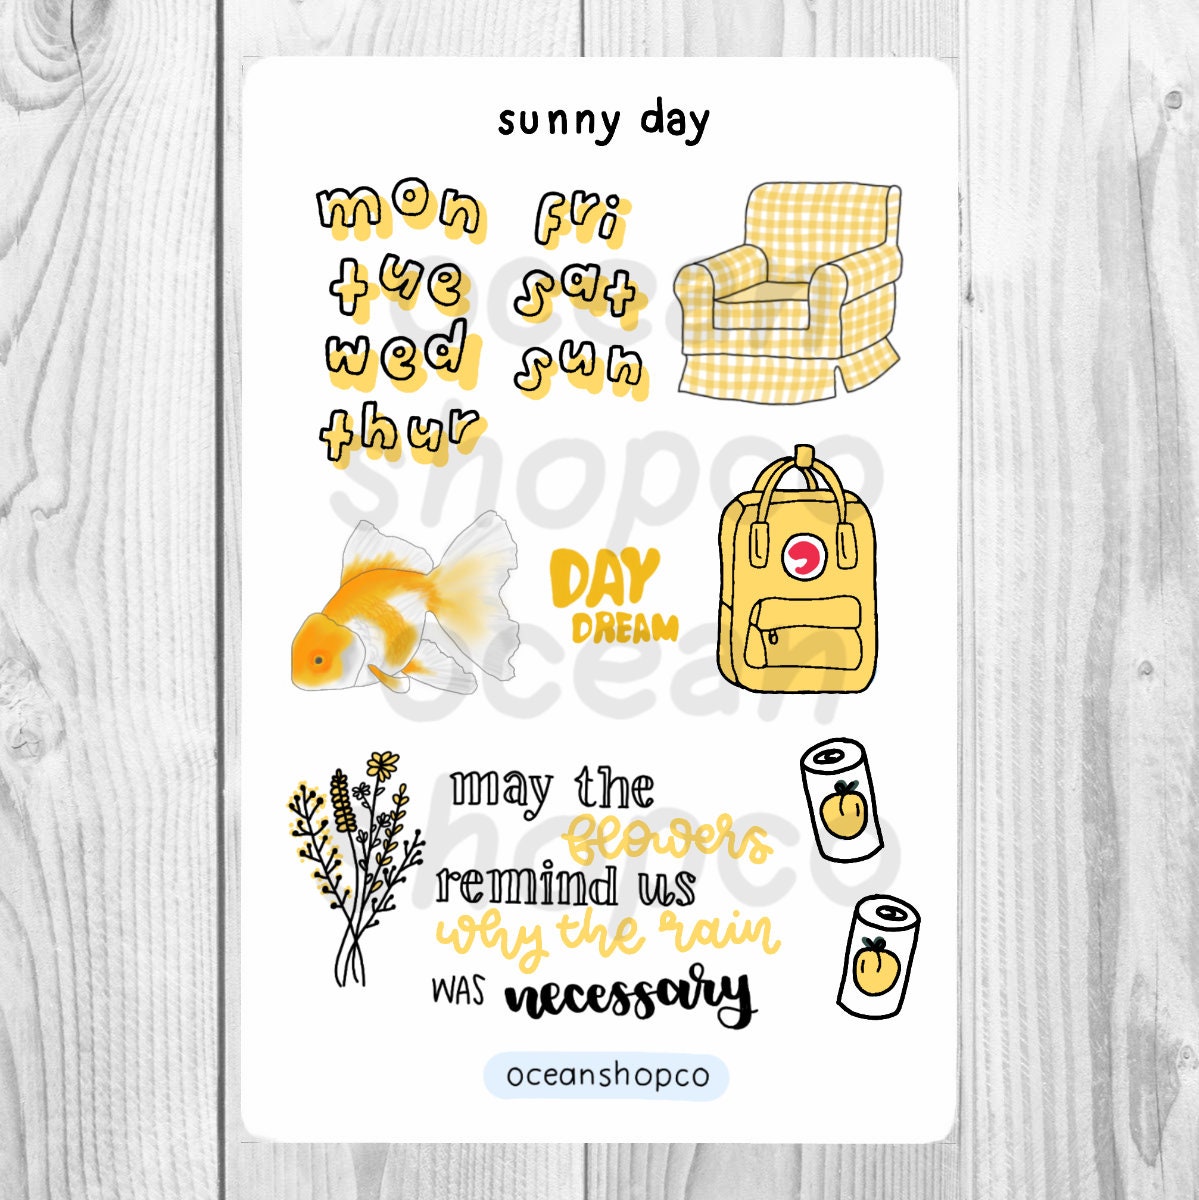 Sunny Day Essentials Sticker Sheet – Paper Sutekka Stationery ペーパーステッカー